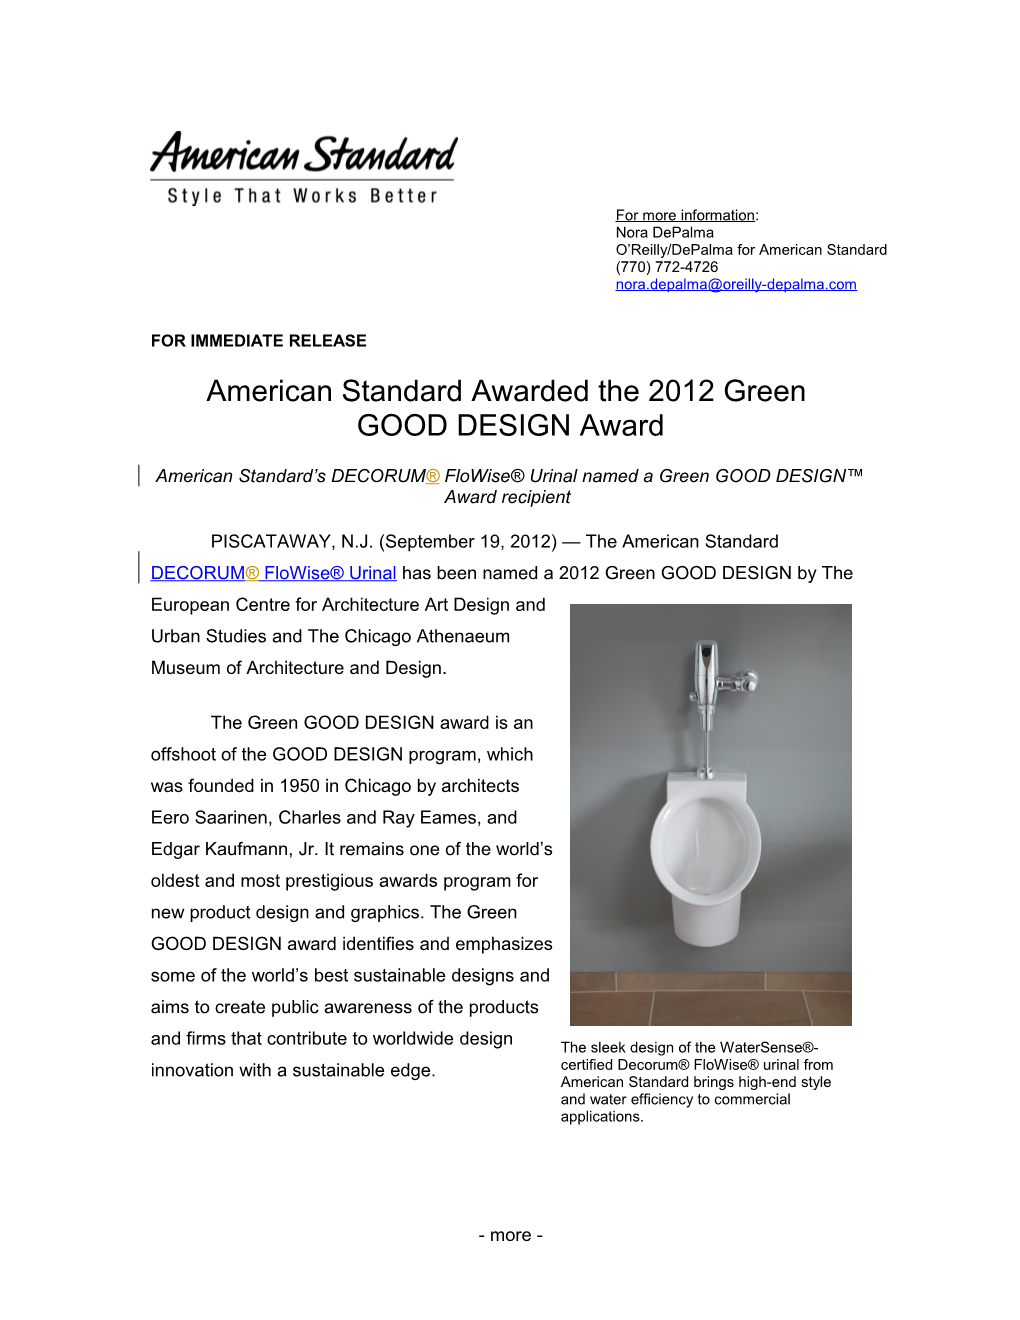 American Standard Awarded the 2012 Green GOOD DESIGN Award 3-3-3